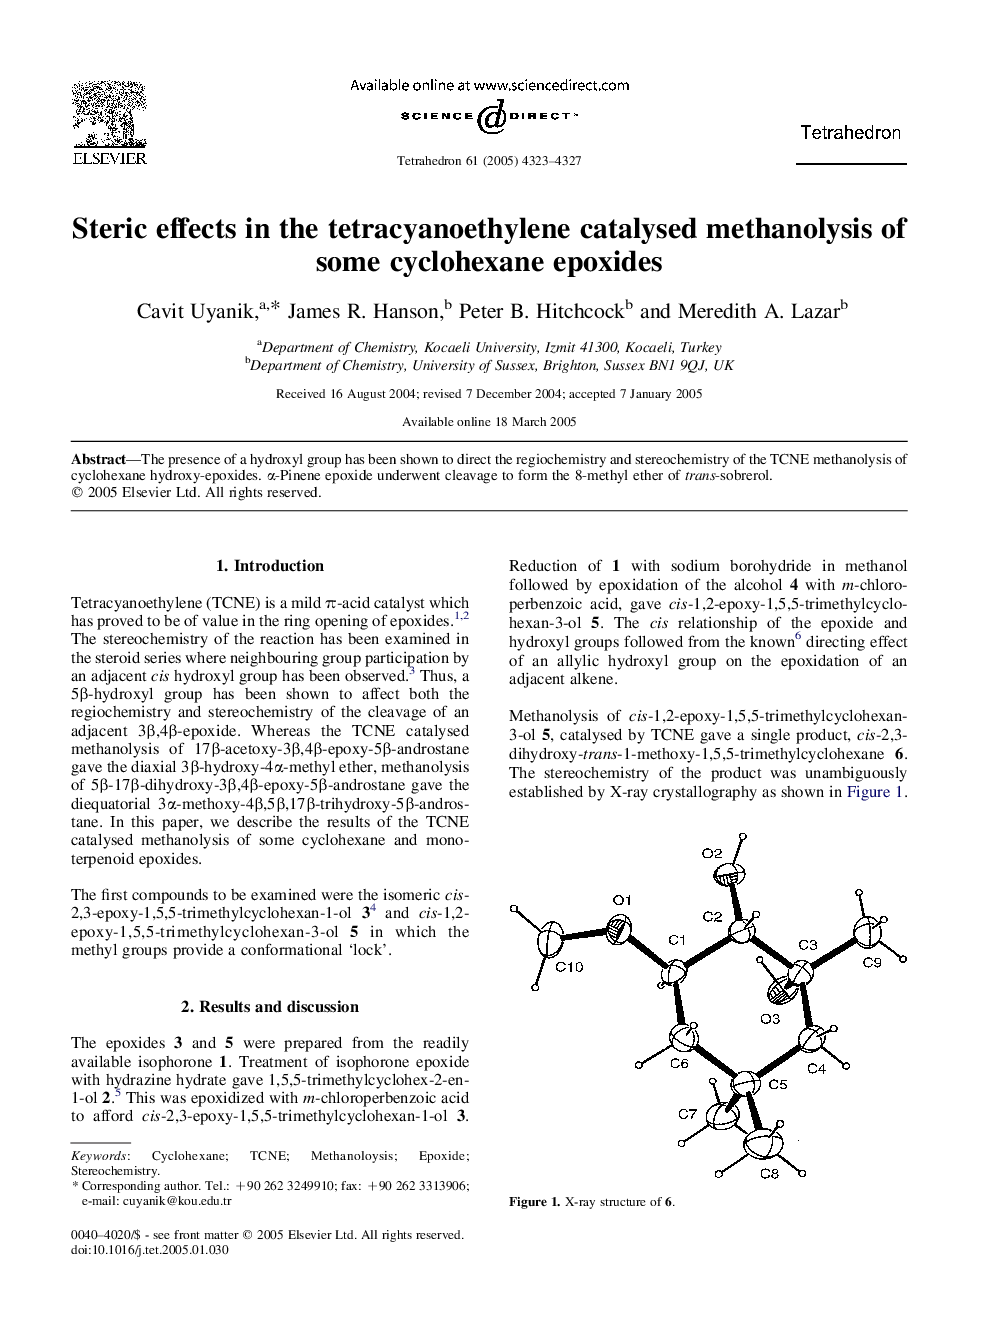 Steric effects in the tetracyanoethylene catalysed methanolysis of some cyclohexane epoxides